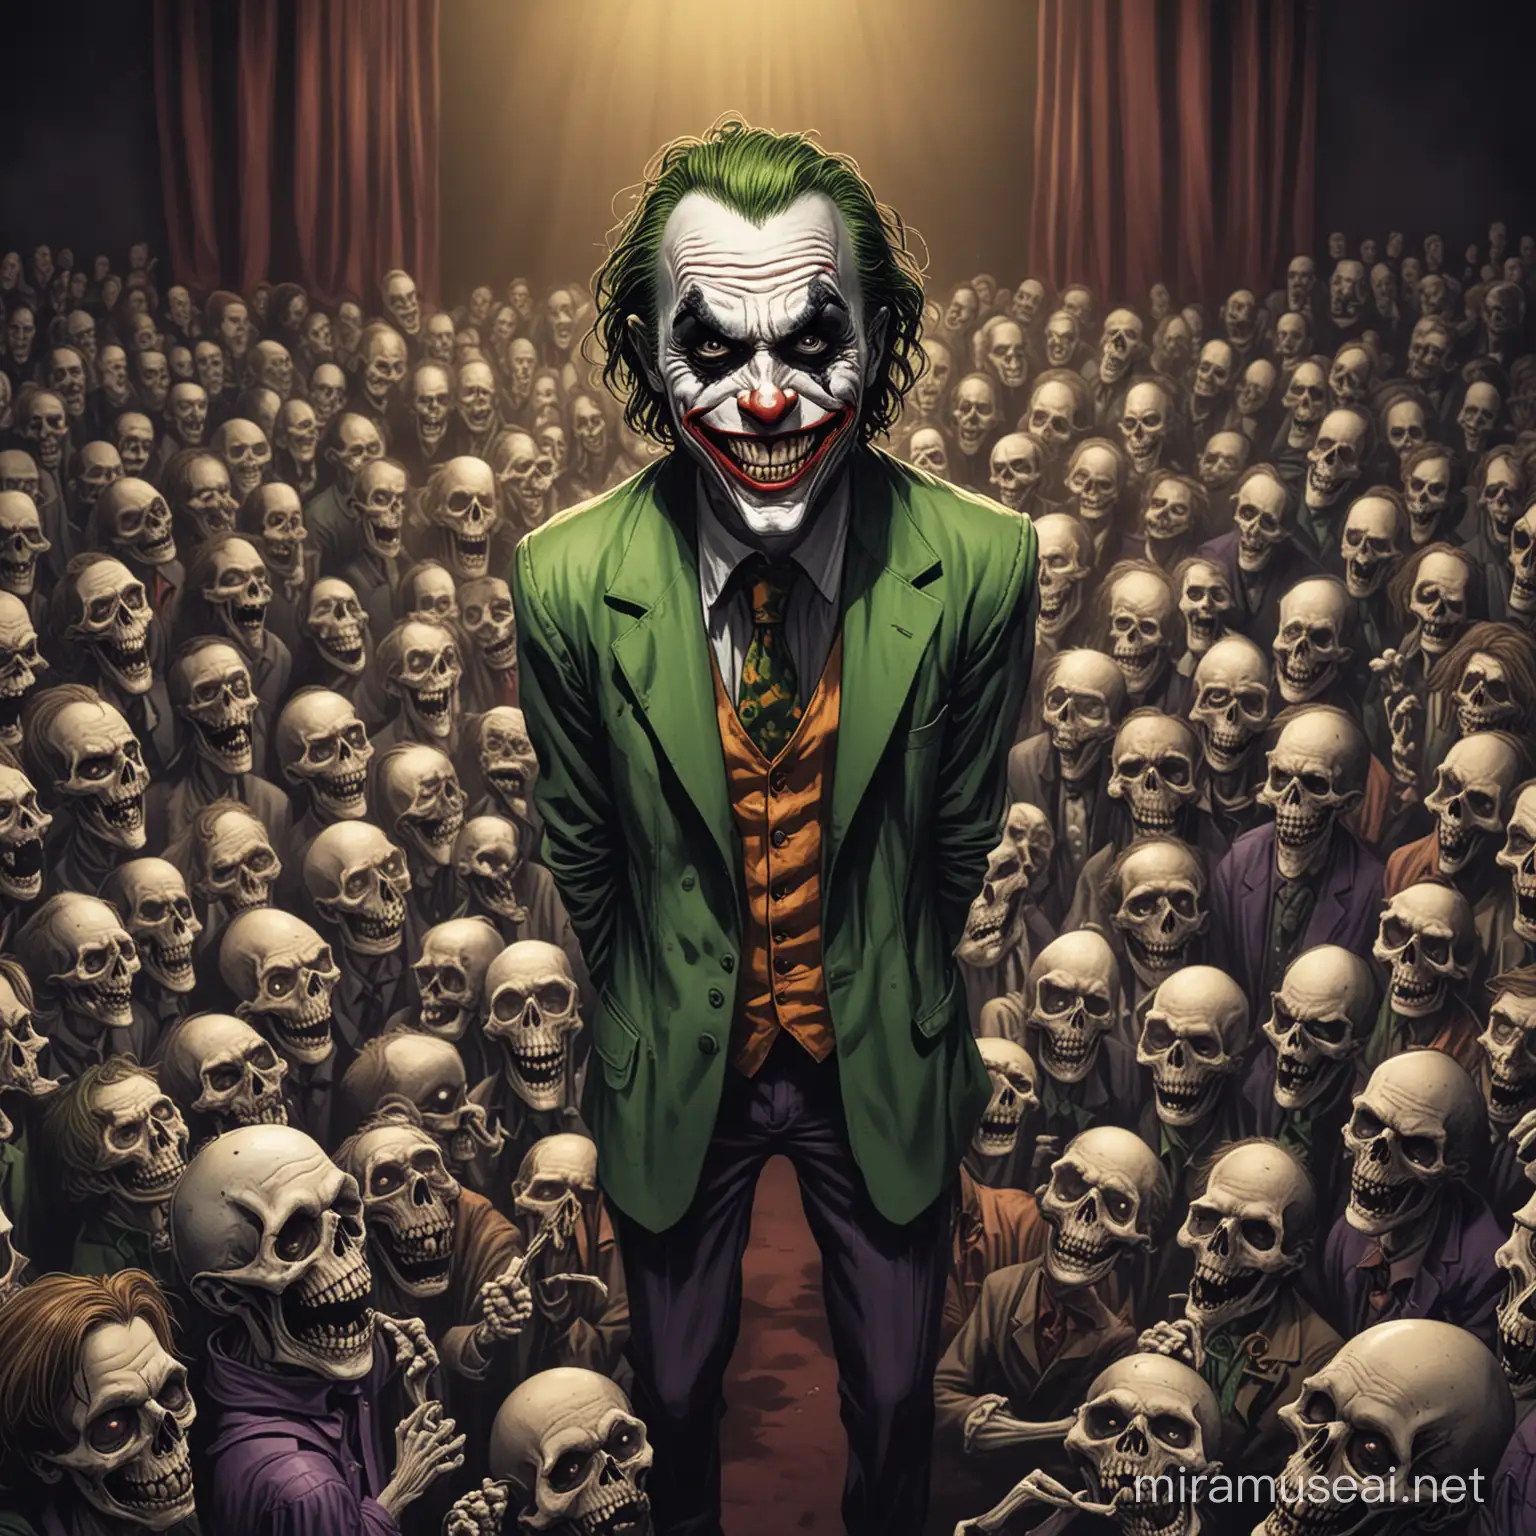 Cartoon Joker StandUp Comedy with Skeleton Audience TShirt Design